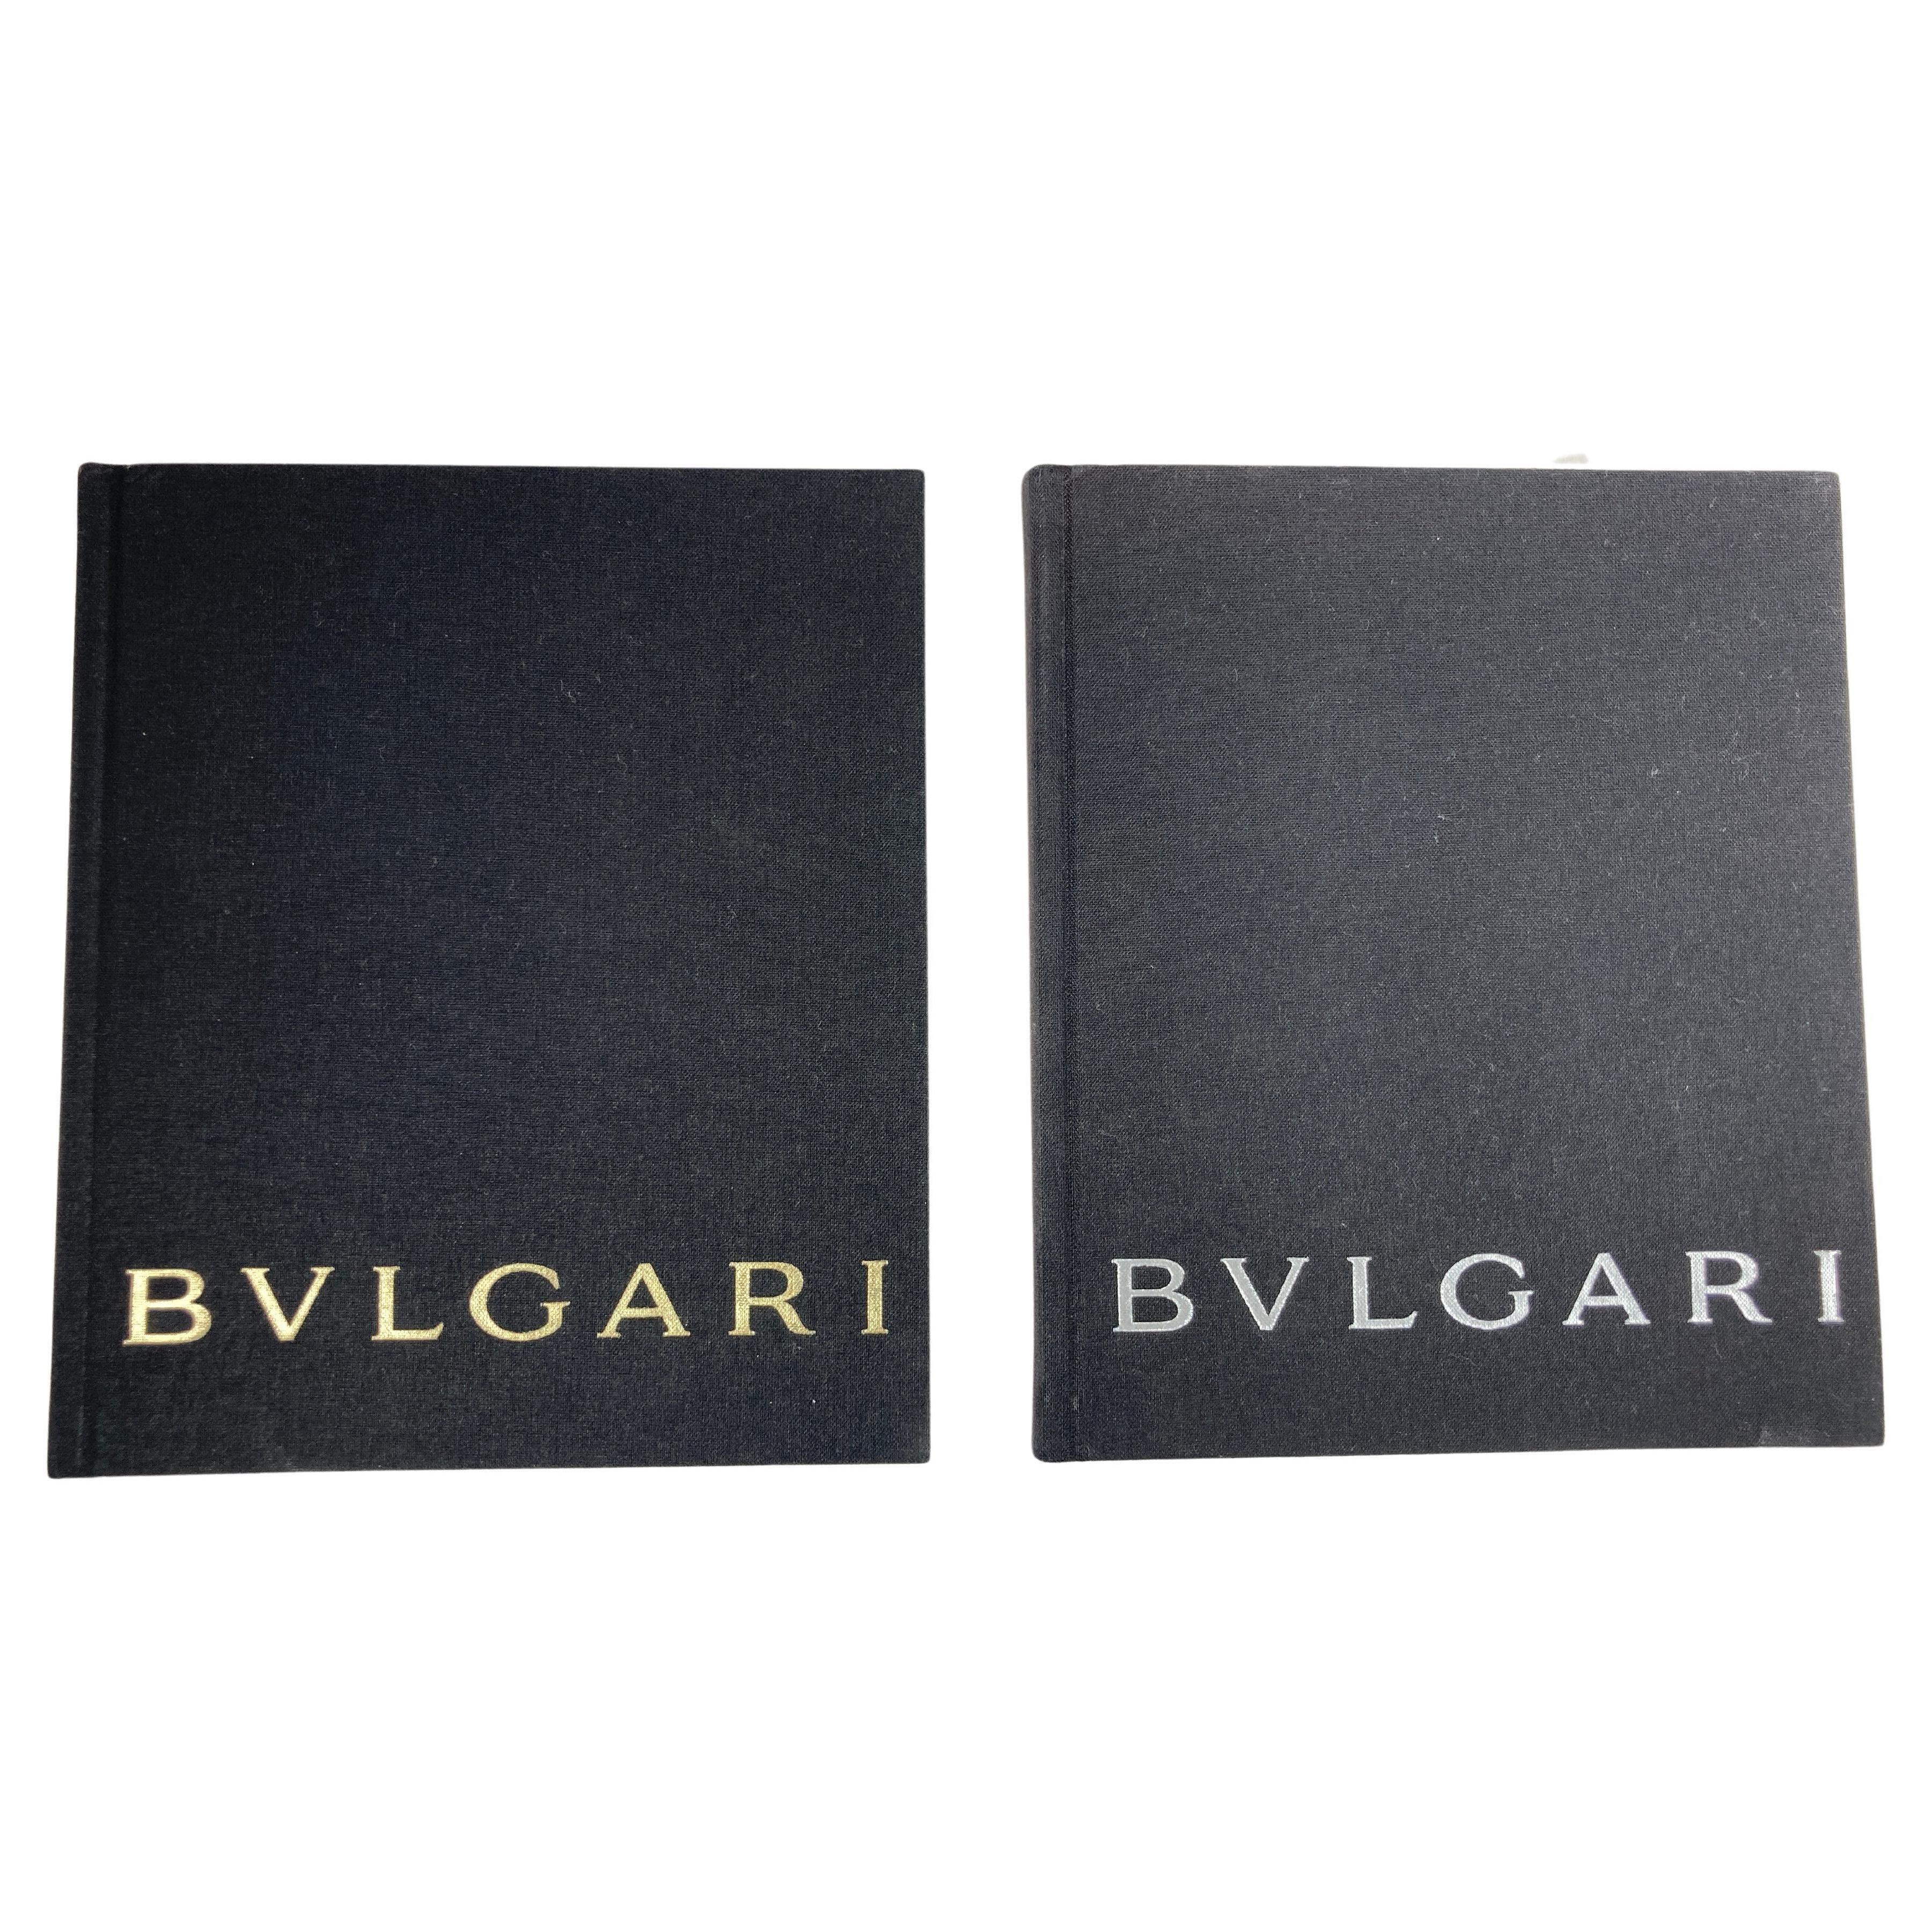 Ensemble de deux livres de la marque Bvlgari Catalogue Jewellery and Watches 2013